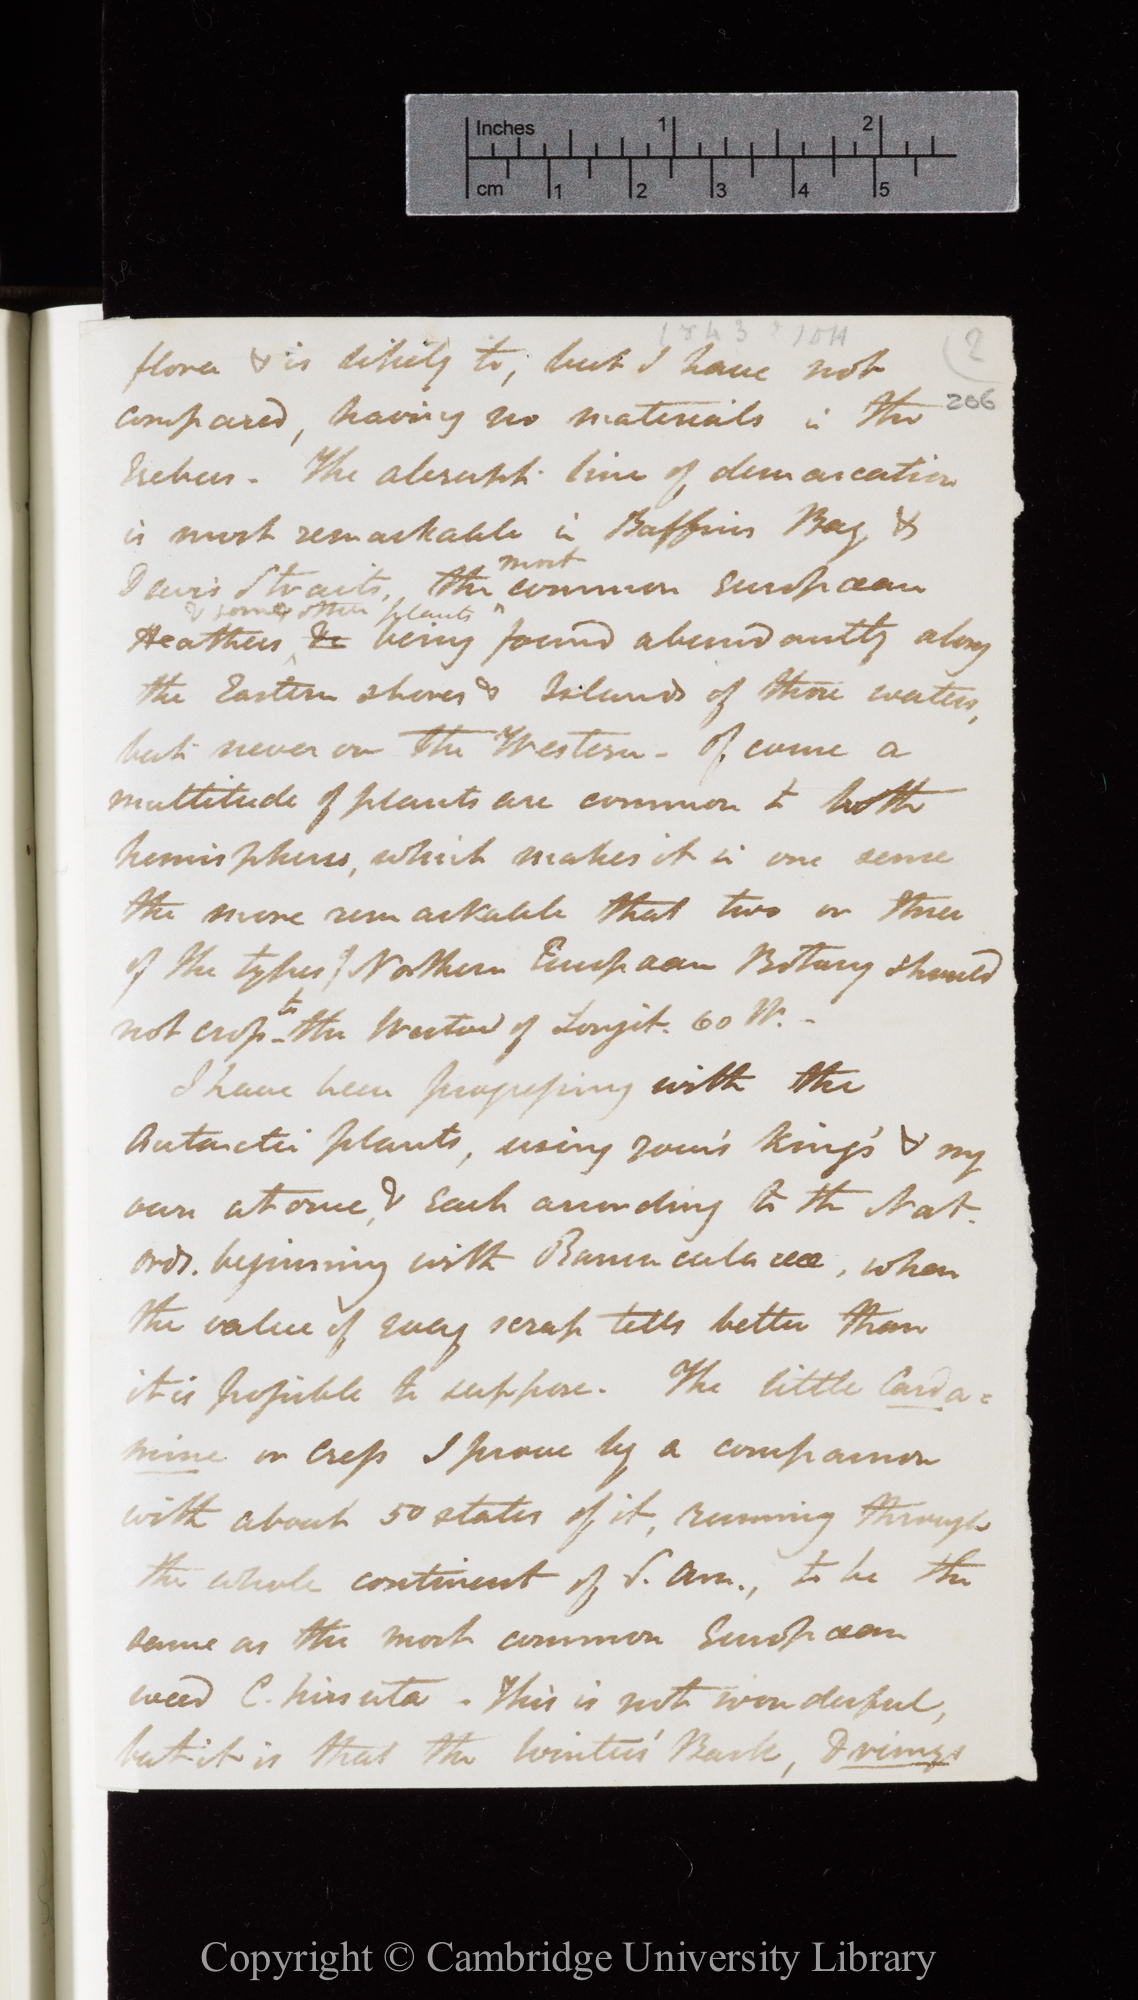 Letter from J. D. Hooker to C. R. Darwin   [12 December 1843 - 11 January 1844]